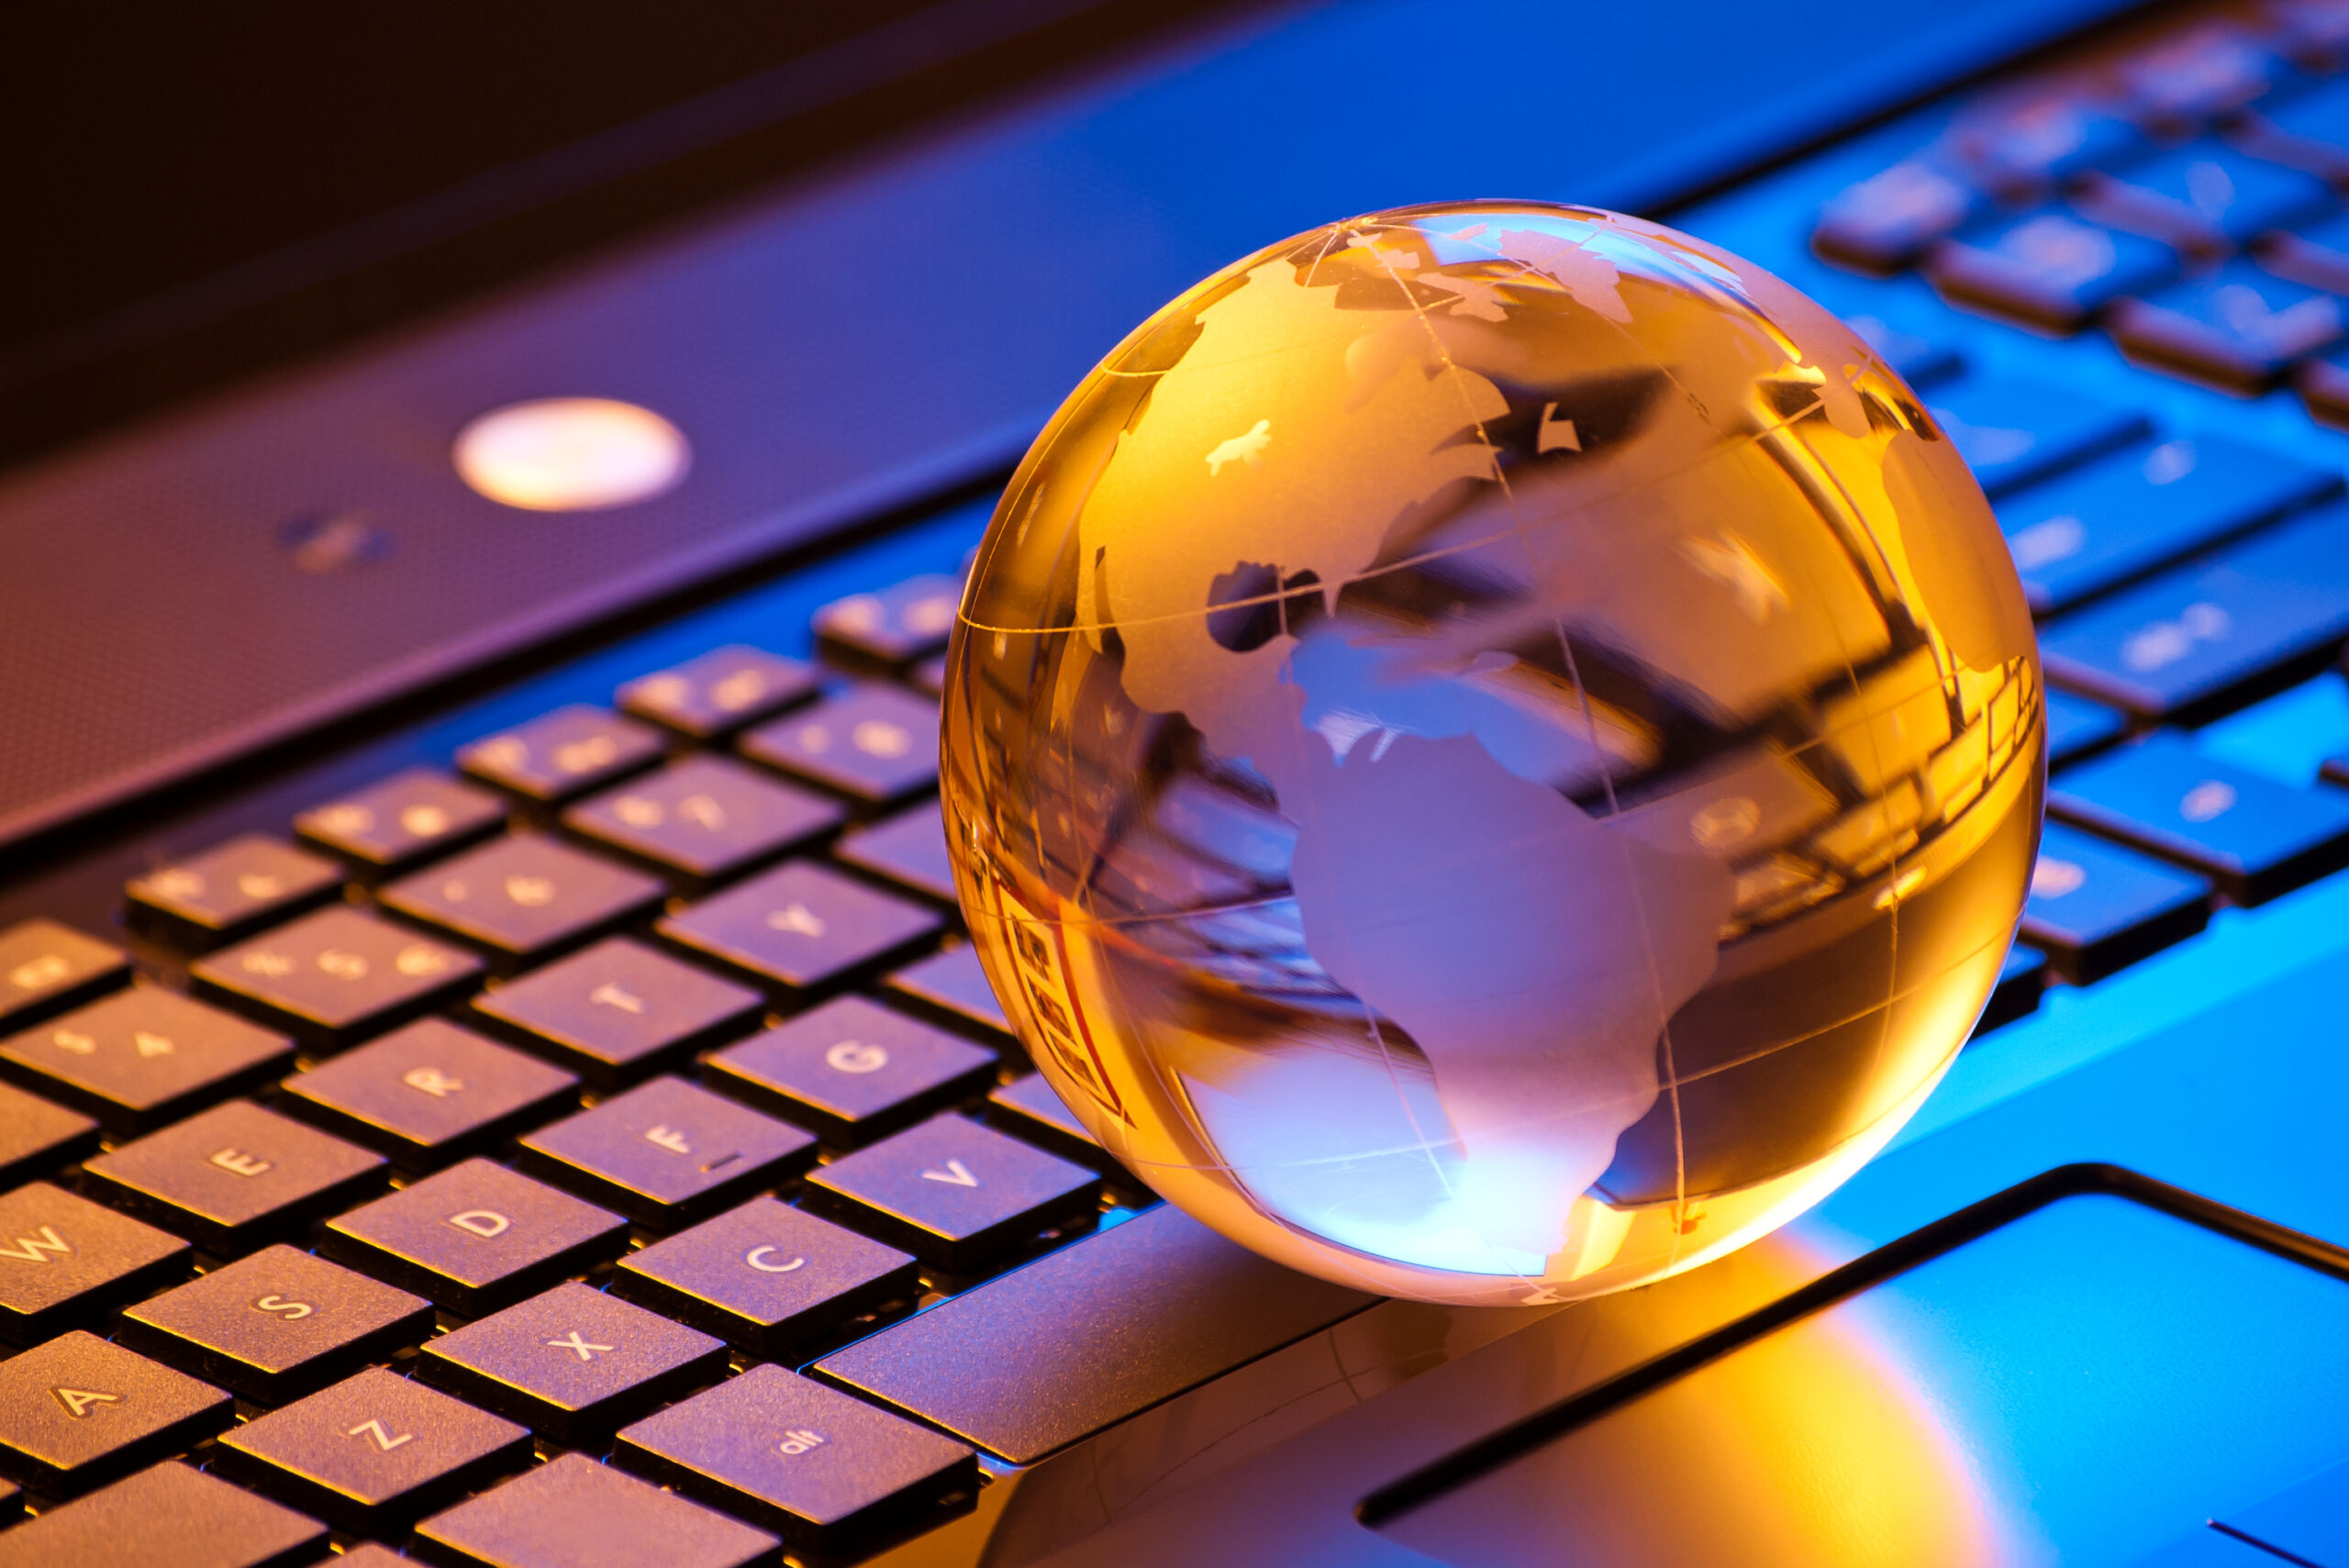 Closeup of a small metal globe sitting on a keyboard reflecting yellow, blue, and purple light.